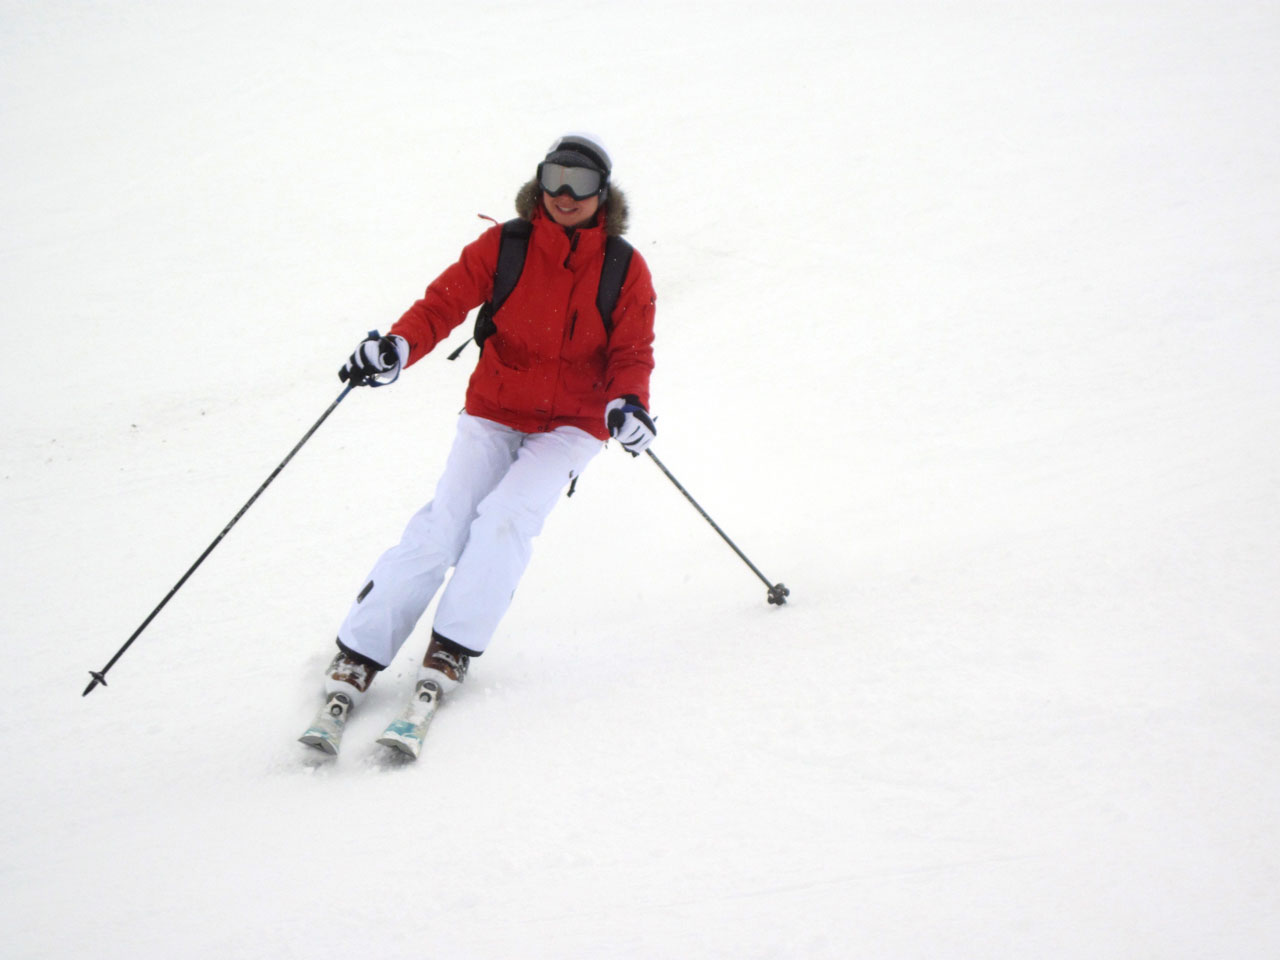 female skier in action on slope